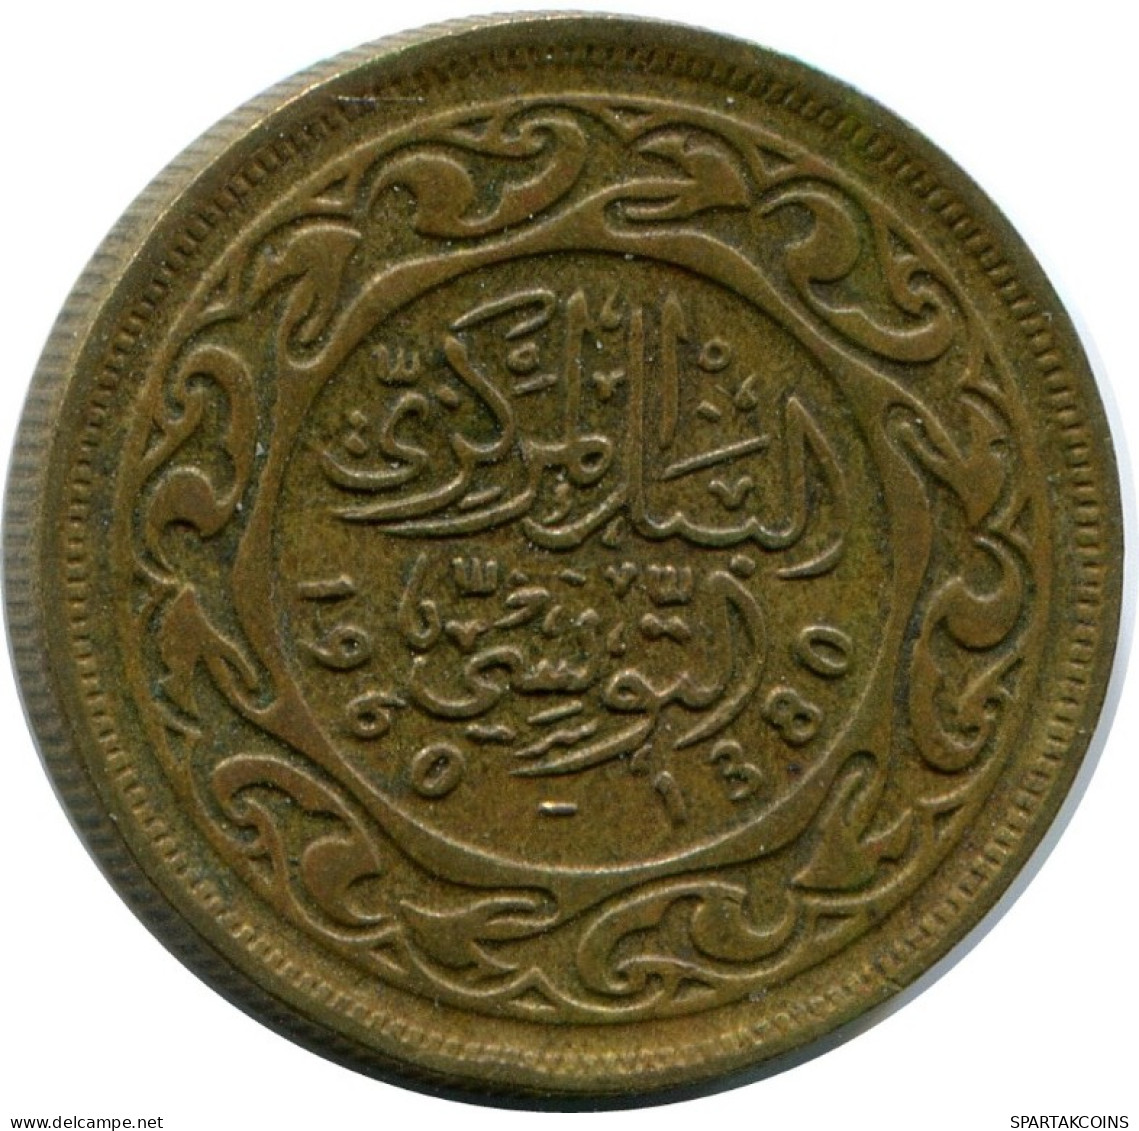 10 MILLIMES 1960 TUNISIA Islamic Coin #AH835.U.A - Tunisia